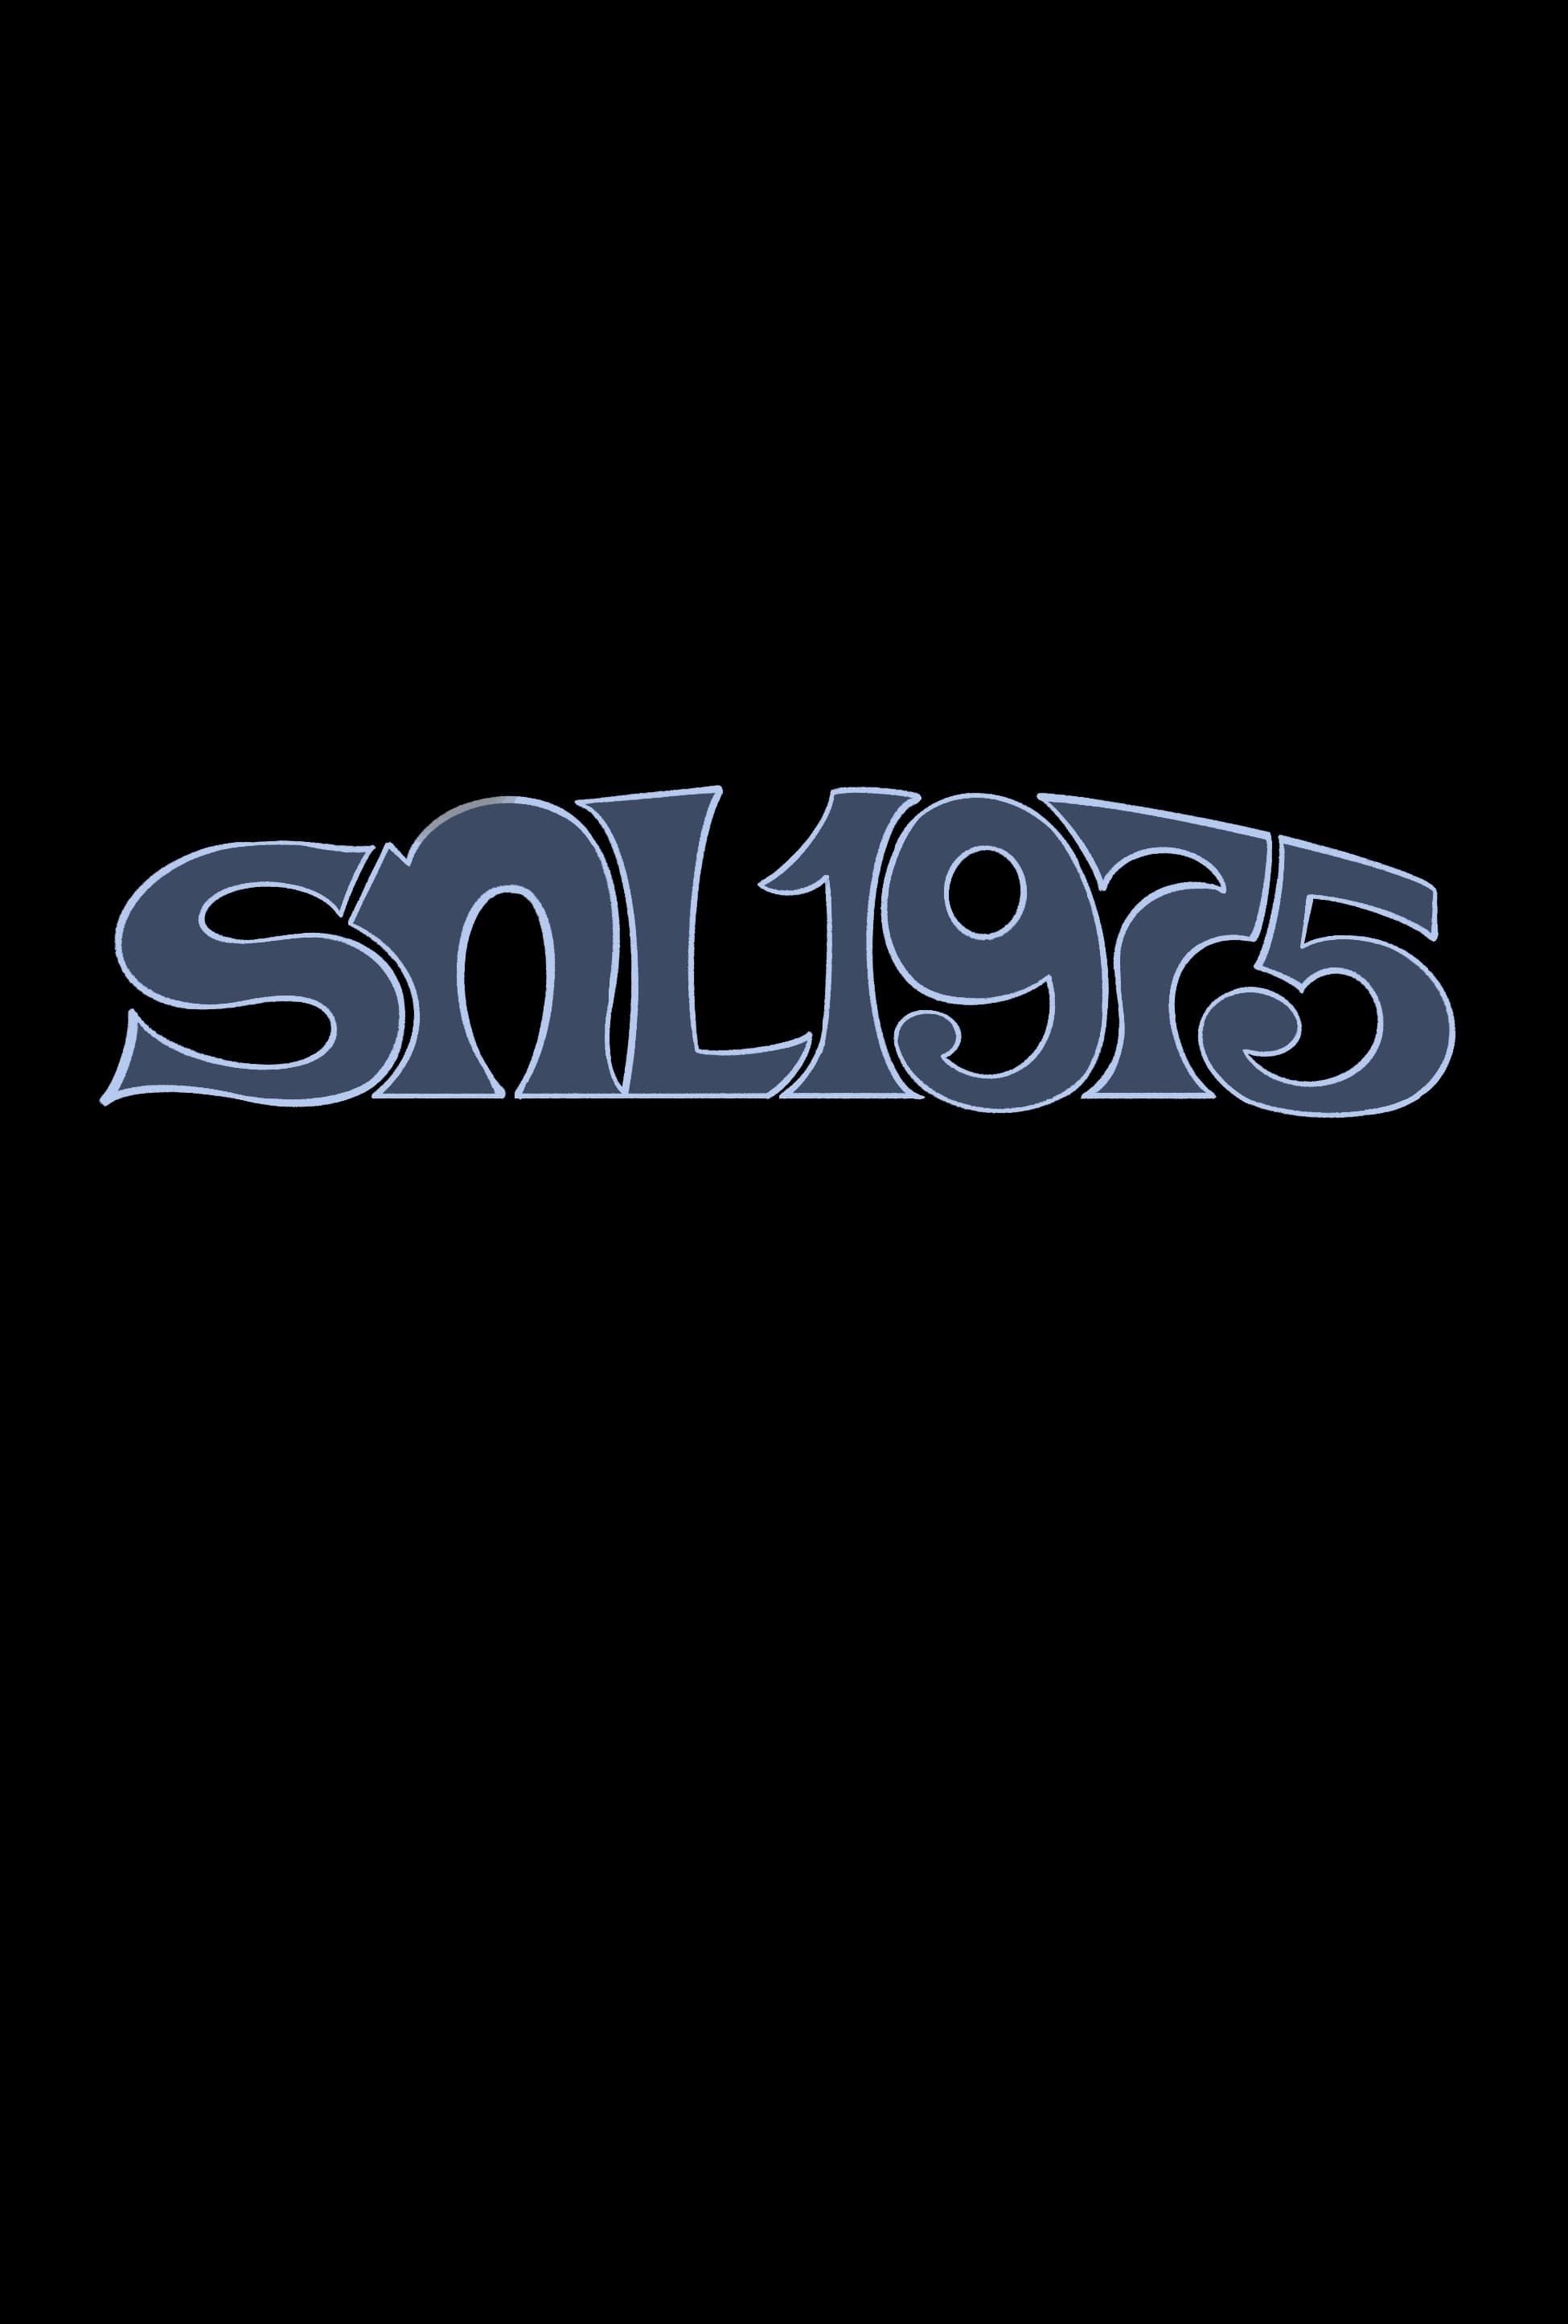 SNL 1975